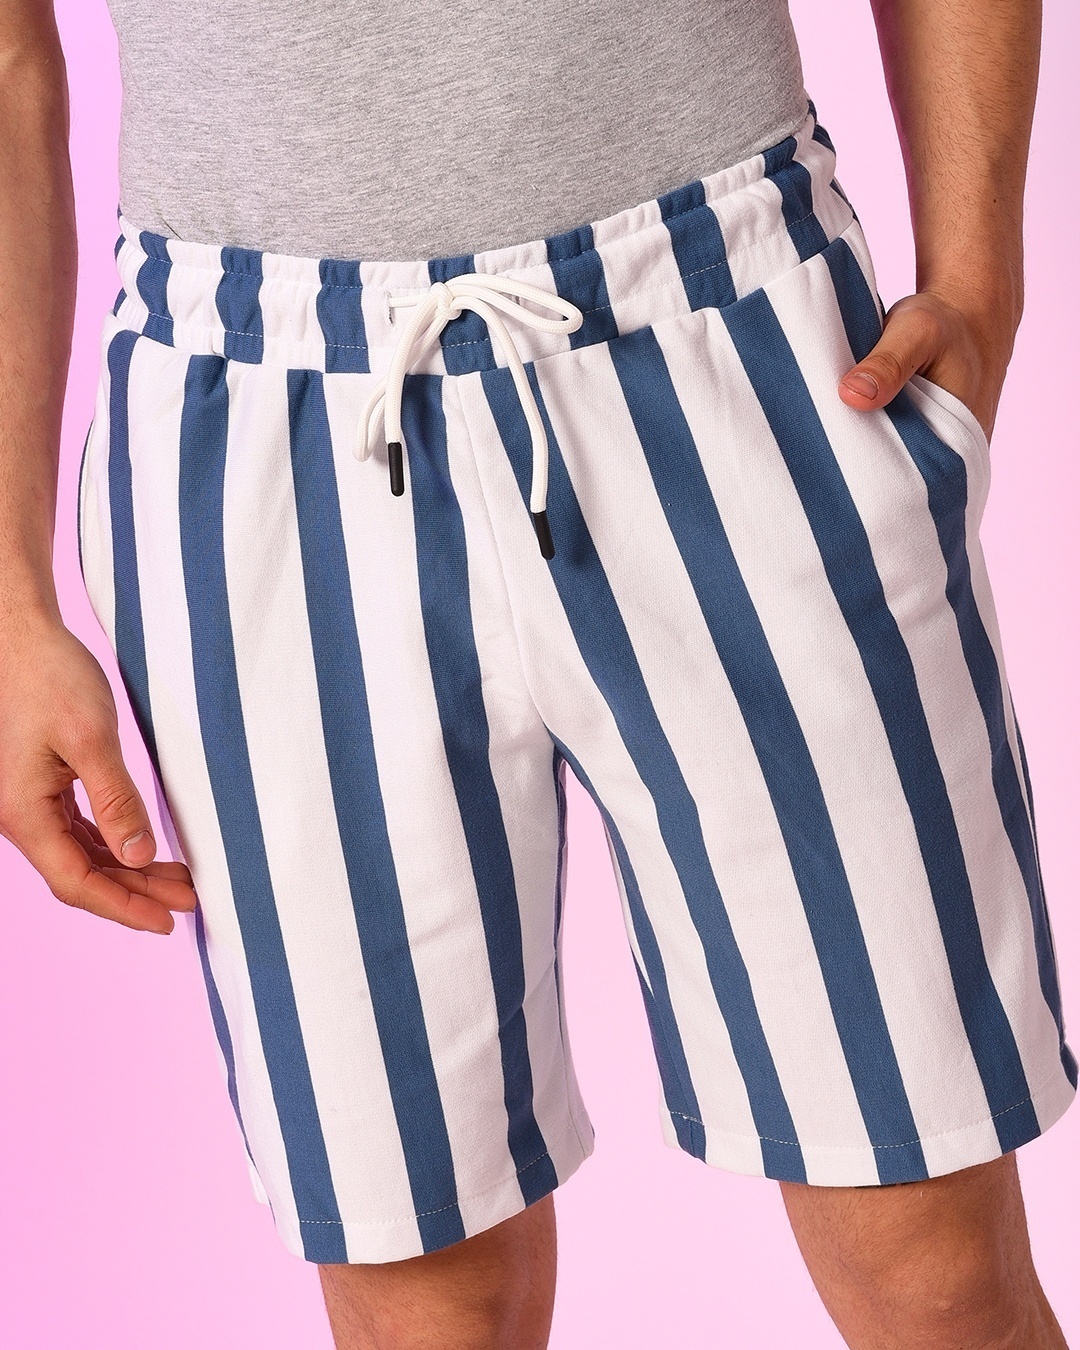 Shop Men's White and Blue Striped Drawstring Shorts